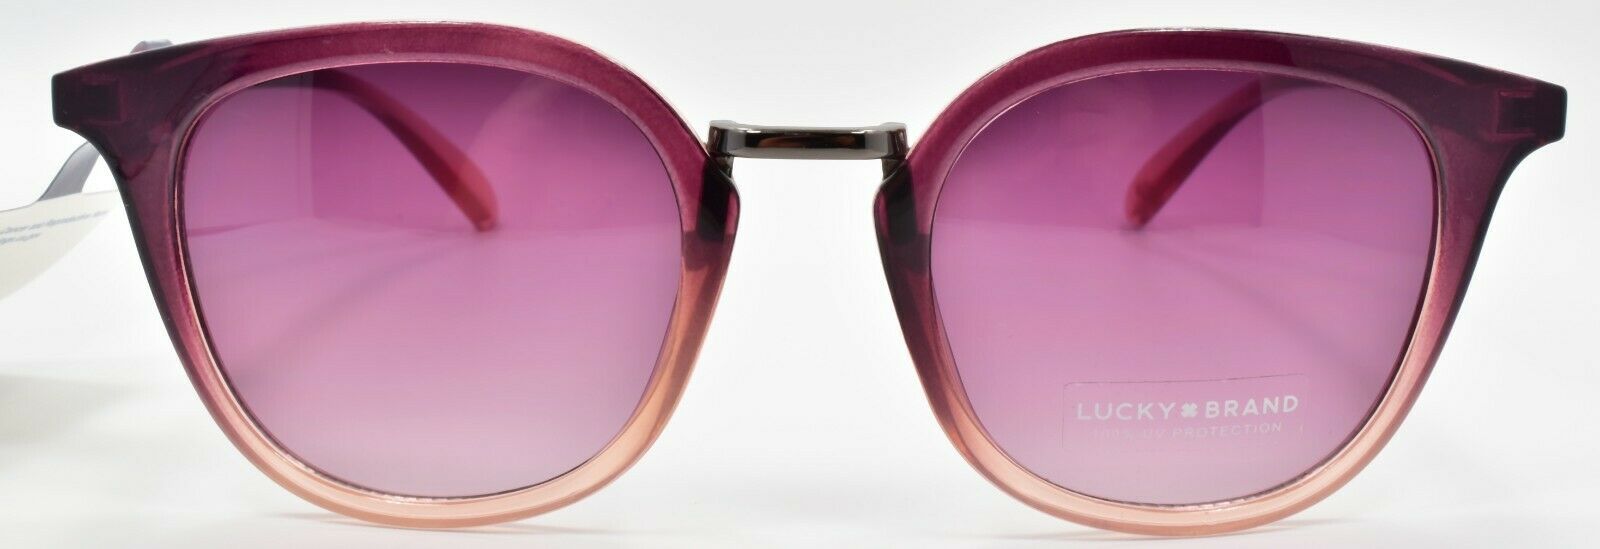 2-LUCKY BRAND Pico Women's Sunglasses 50-23-144 Purple Gradient / Smoke-751286336184-IKSpecs